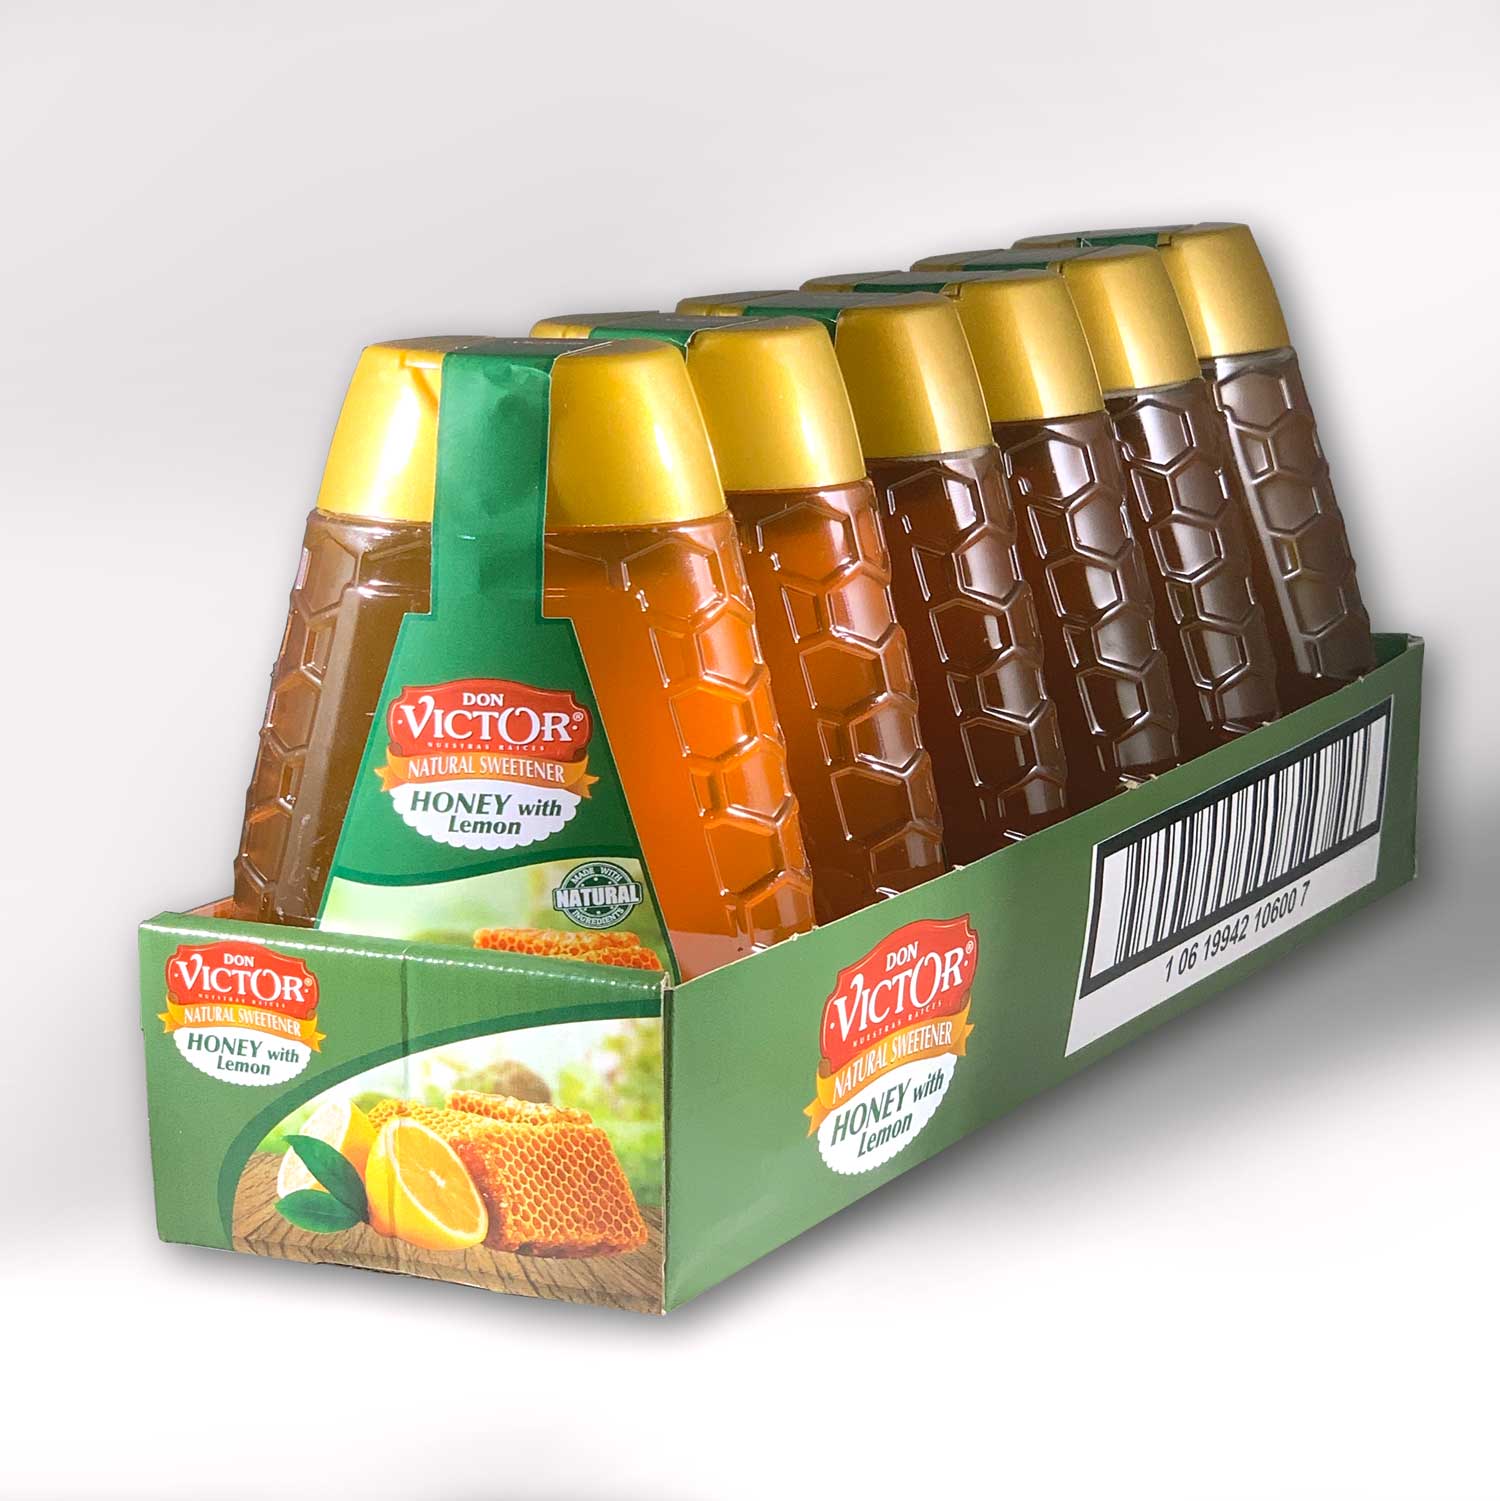 Case of Don Victor lemon flavored honey, with 6 bottles of natural honey flavors.